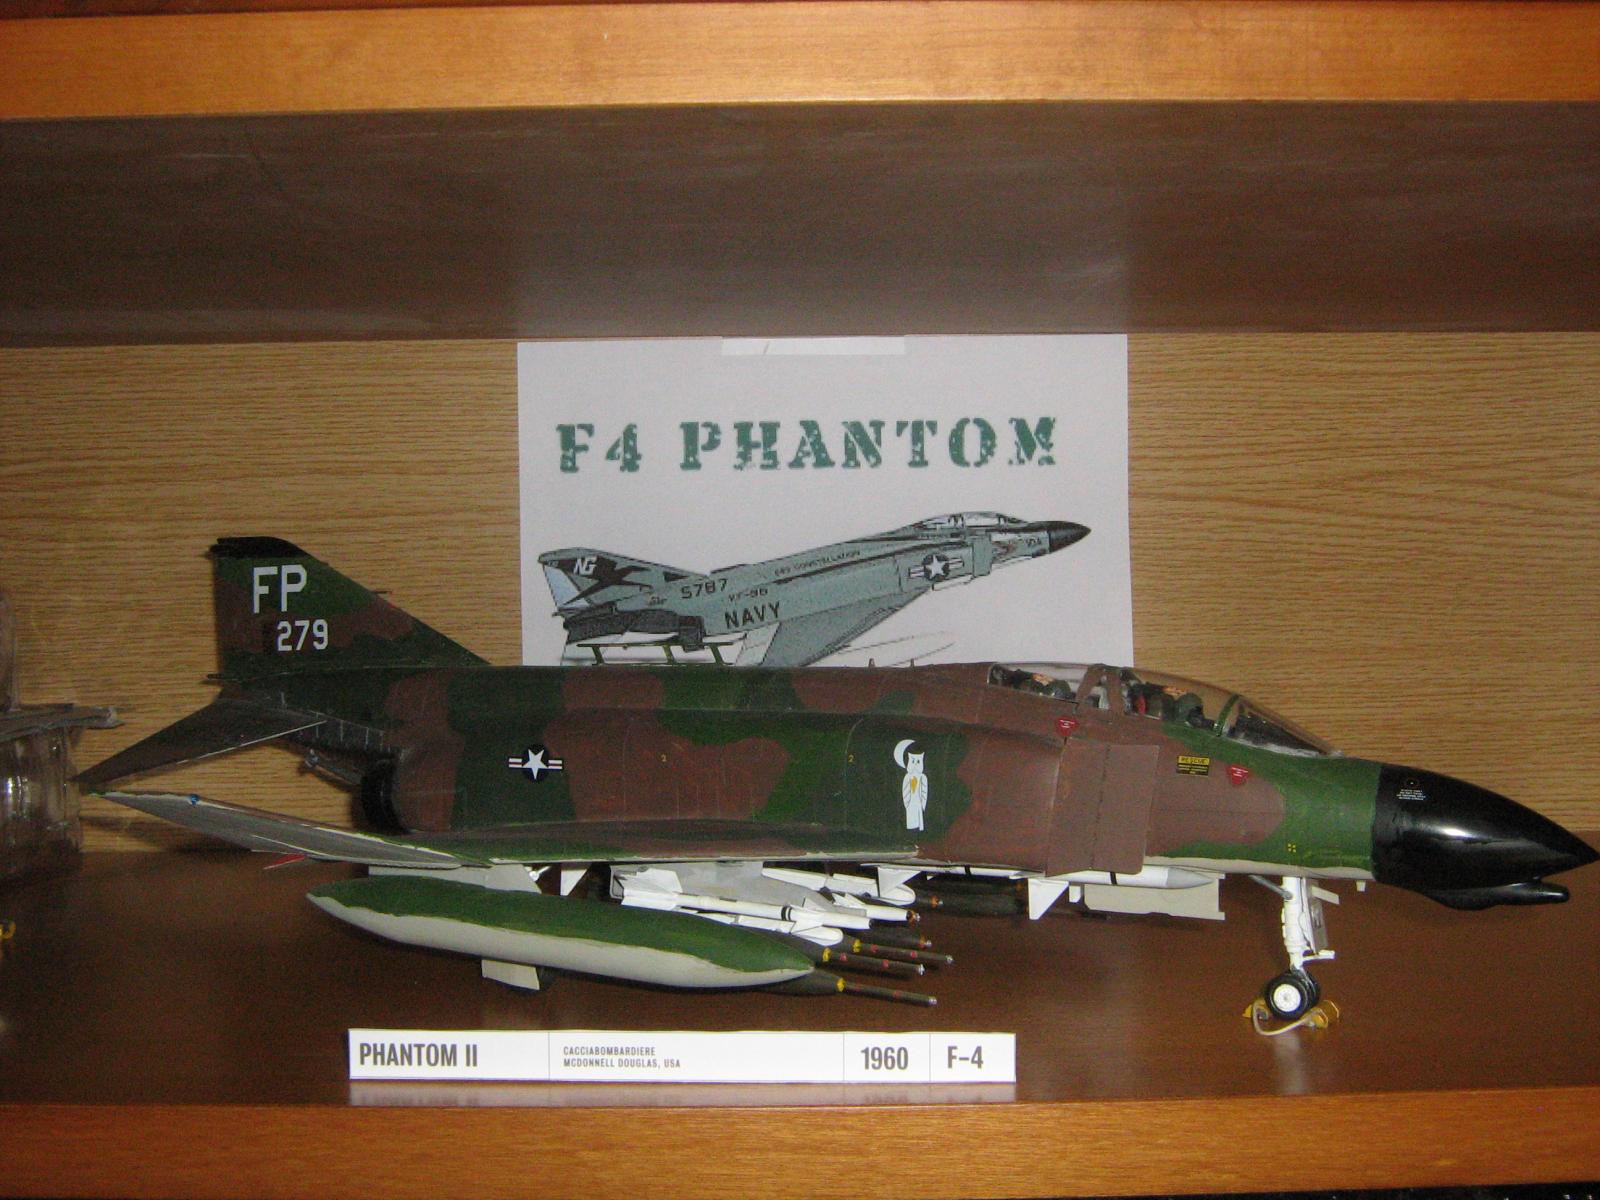 Phantom F-4D " TERRIBLE TYKE" 497th TFS, 8th TFW